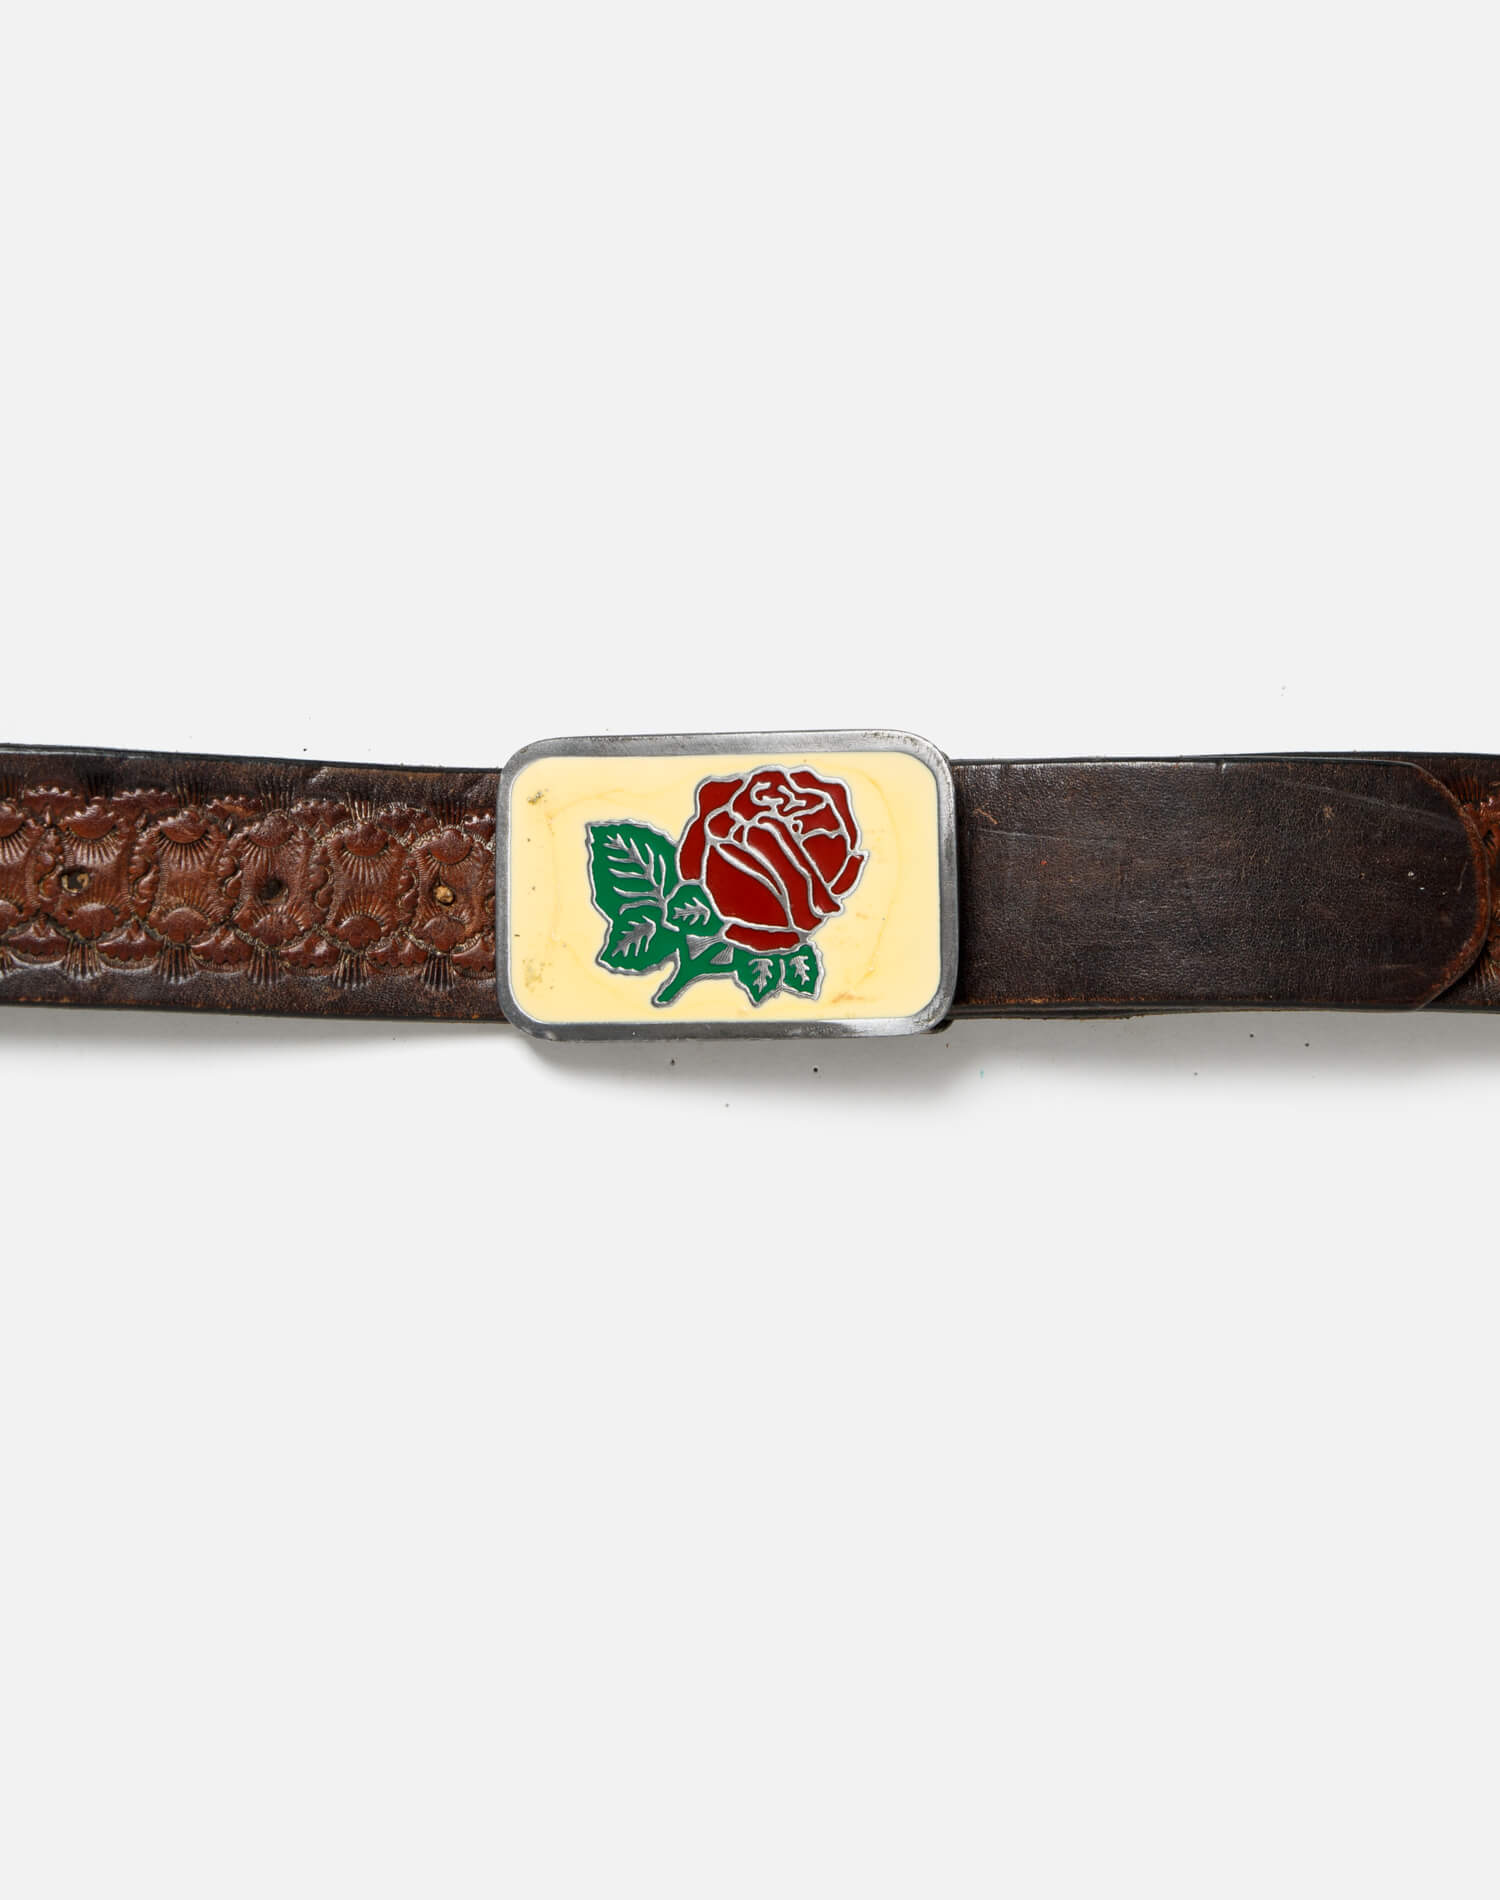 70s Painted Rose Buckle on Braid Detail Belt